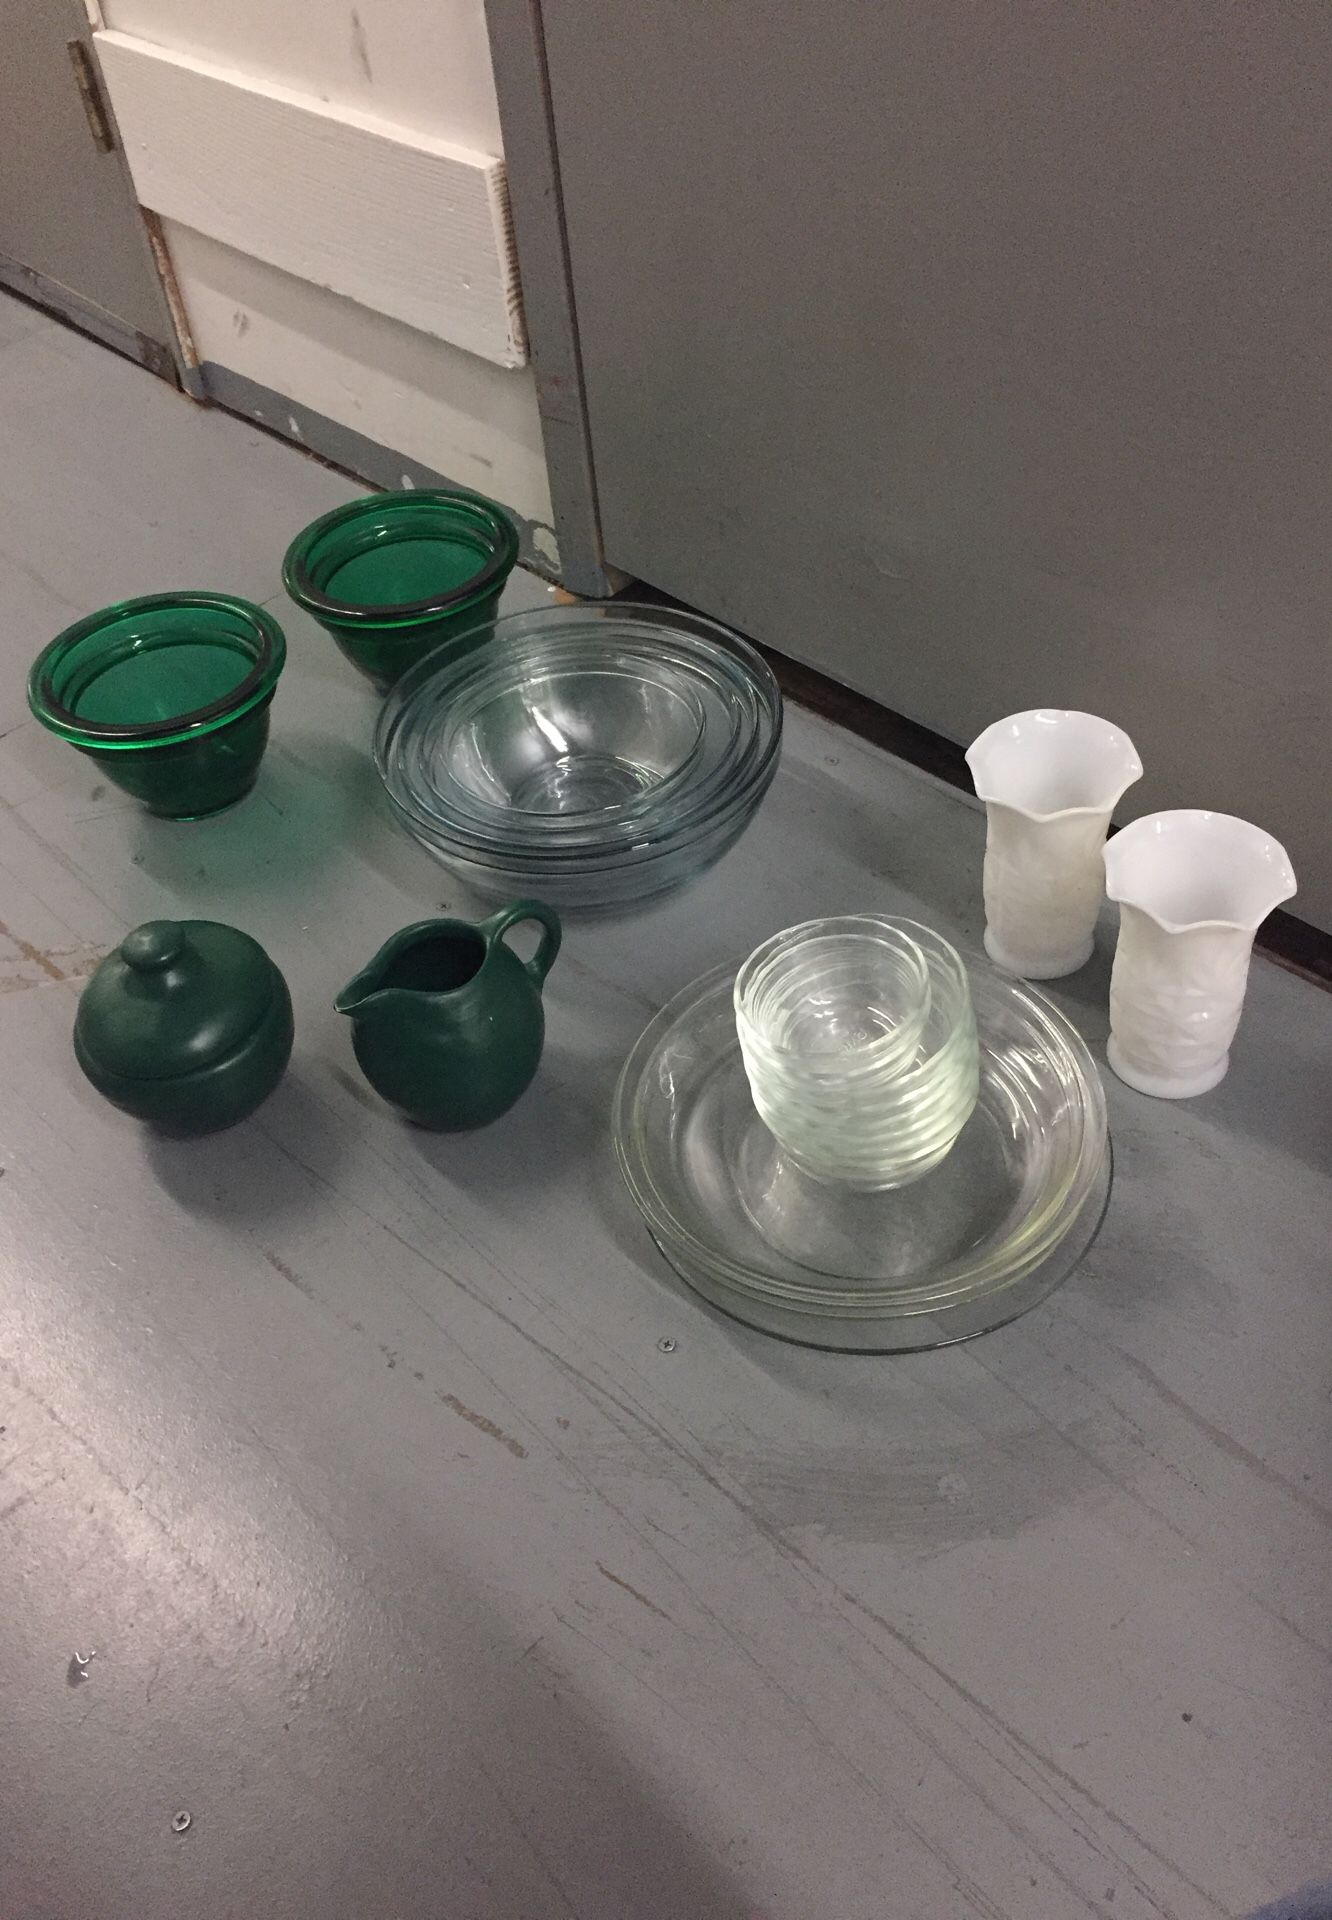 decorative kitchen glass and pyrex bowls